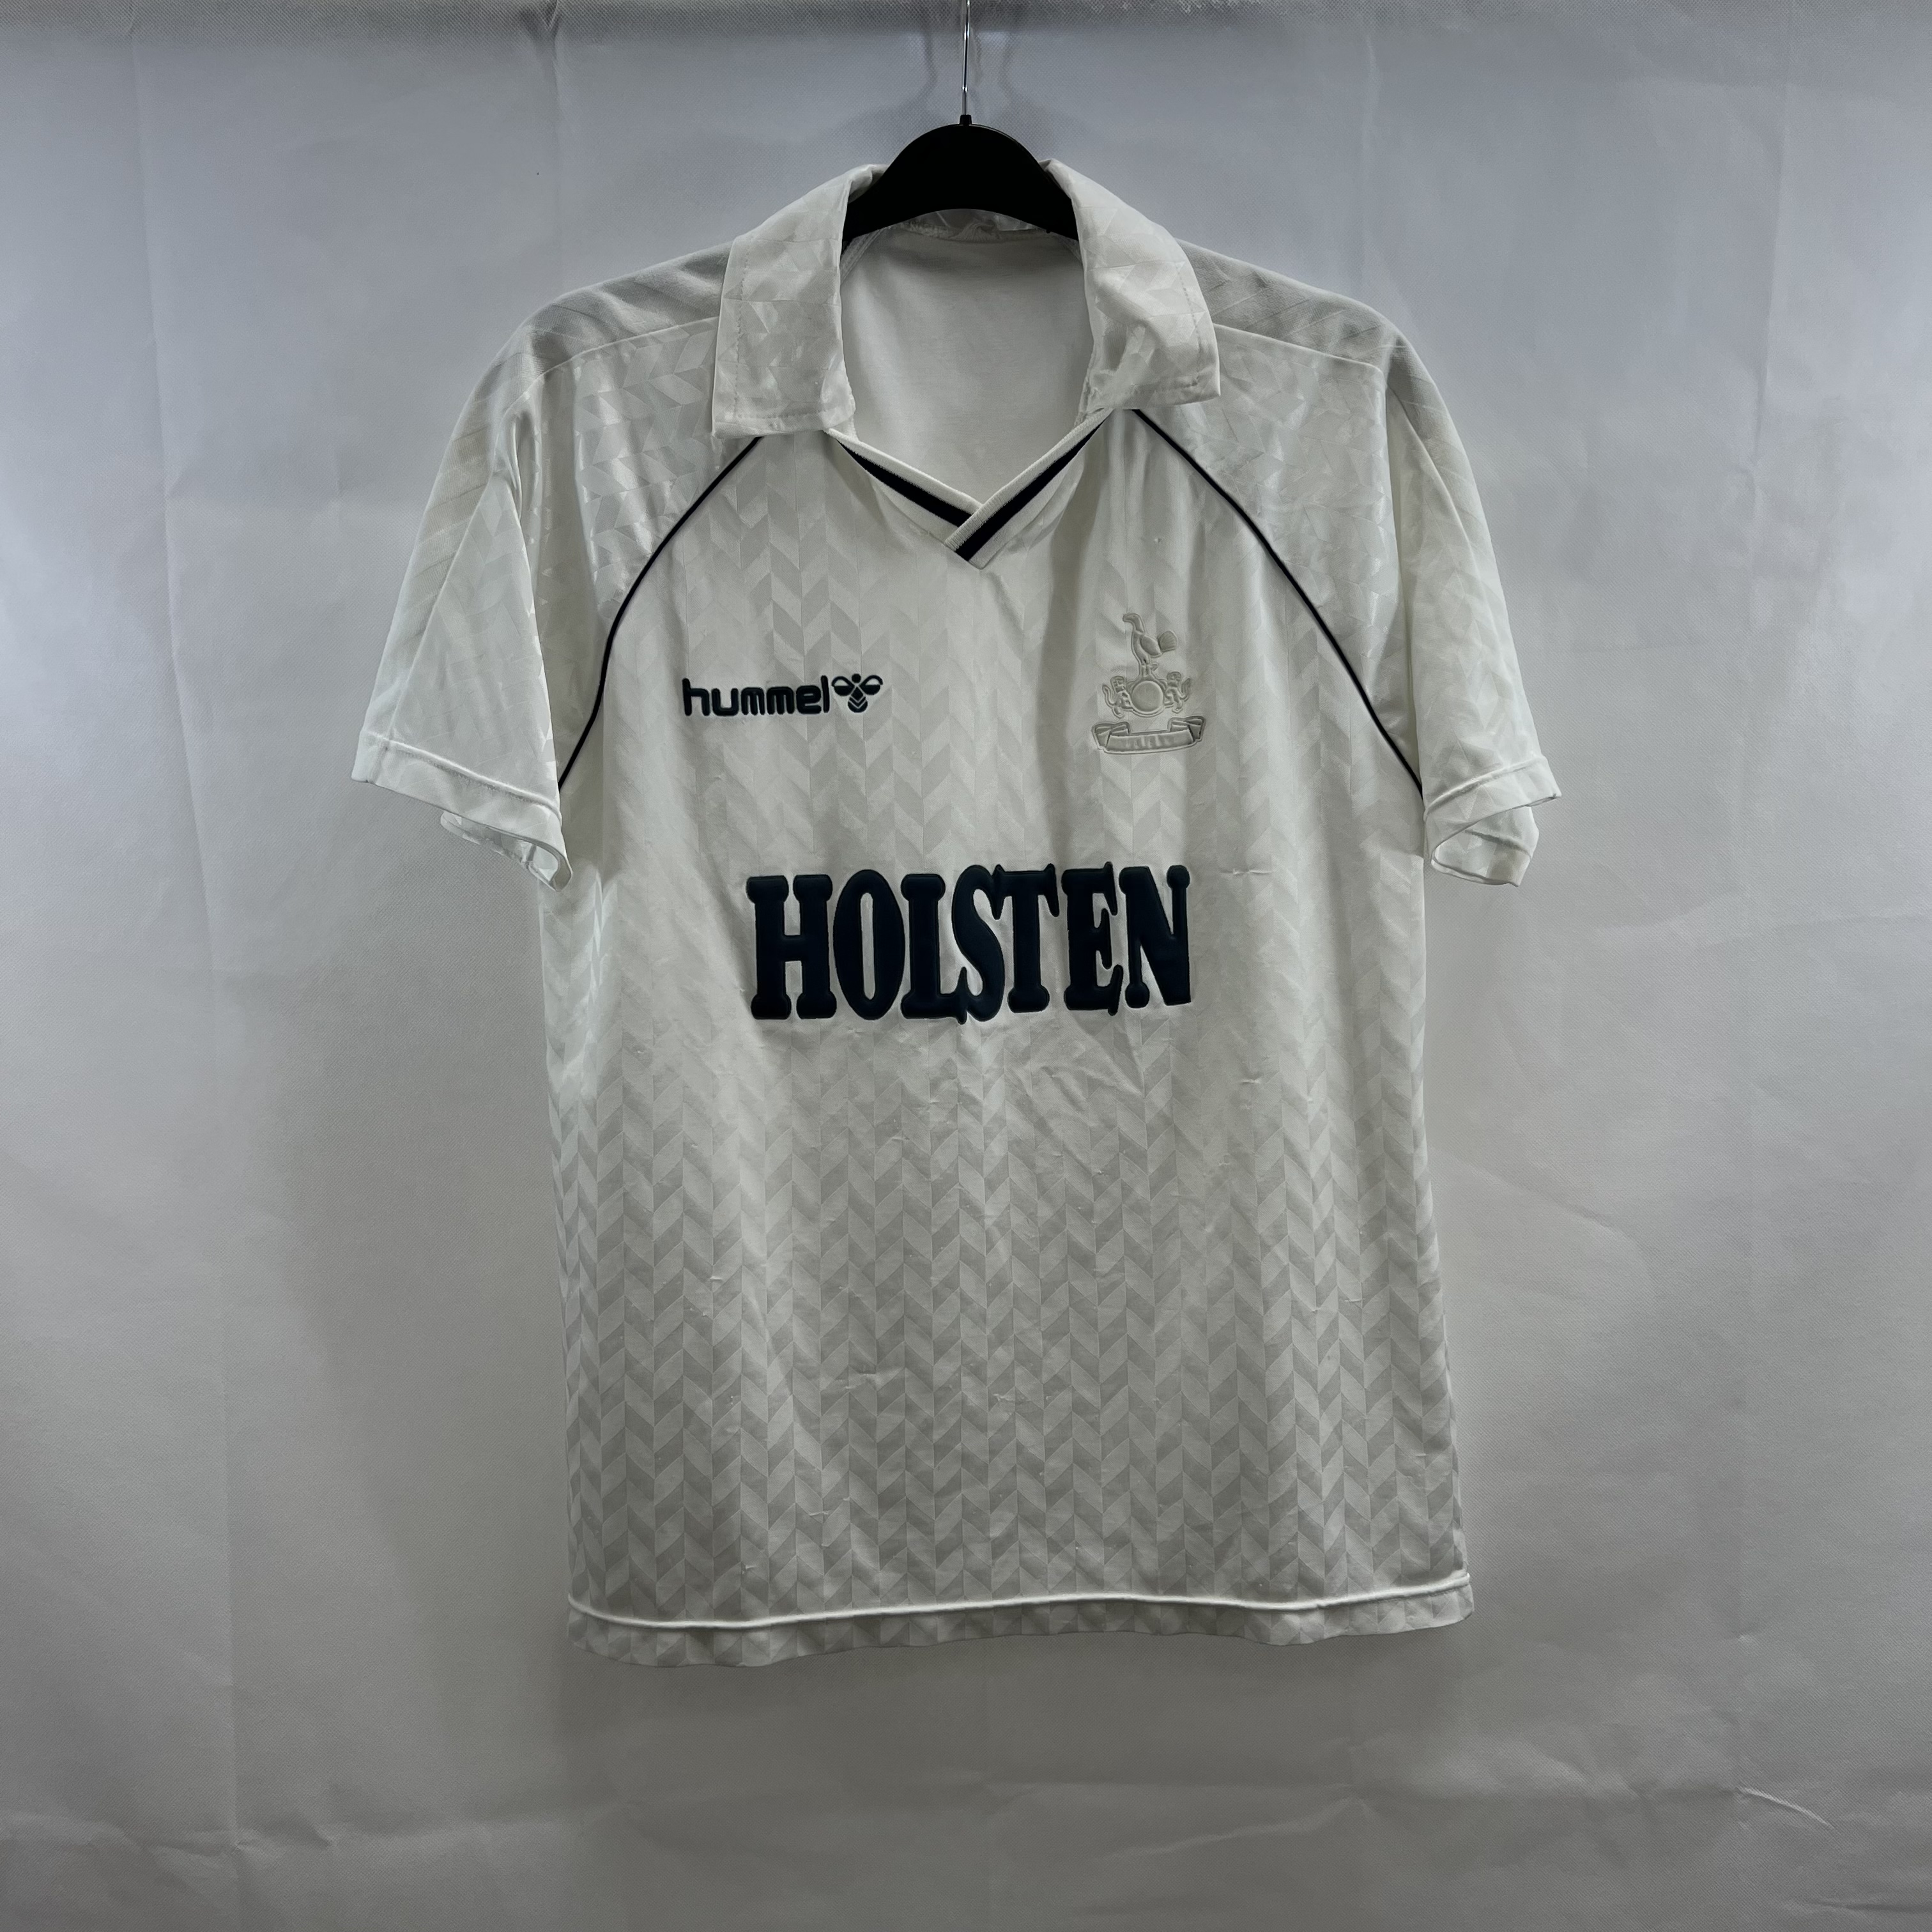 Tottenham Hotspur Home football shirt 1987 - 1989. Sponsored by Holsten